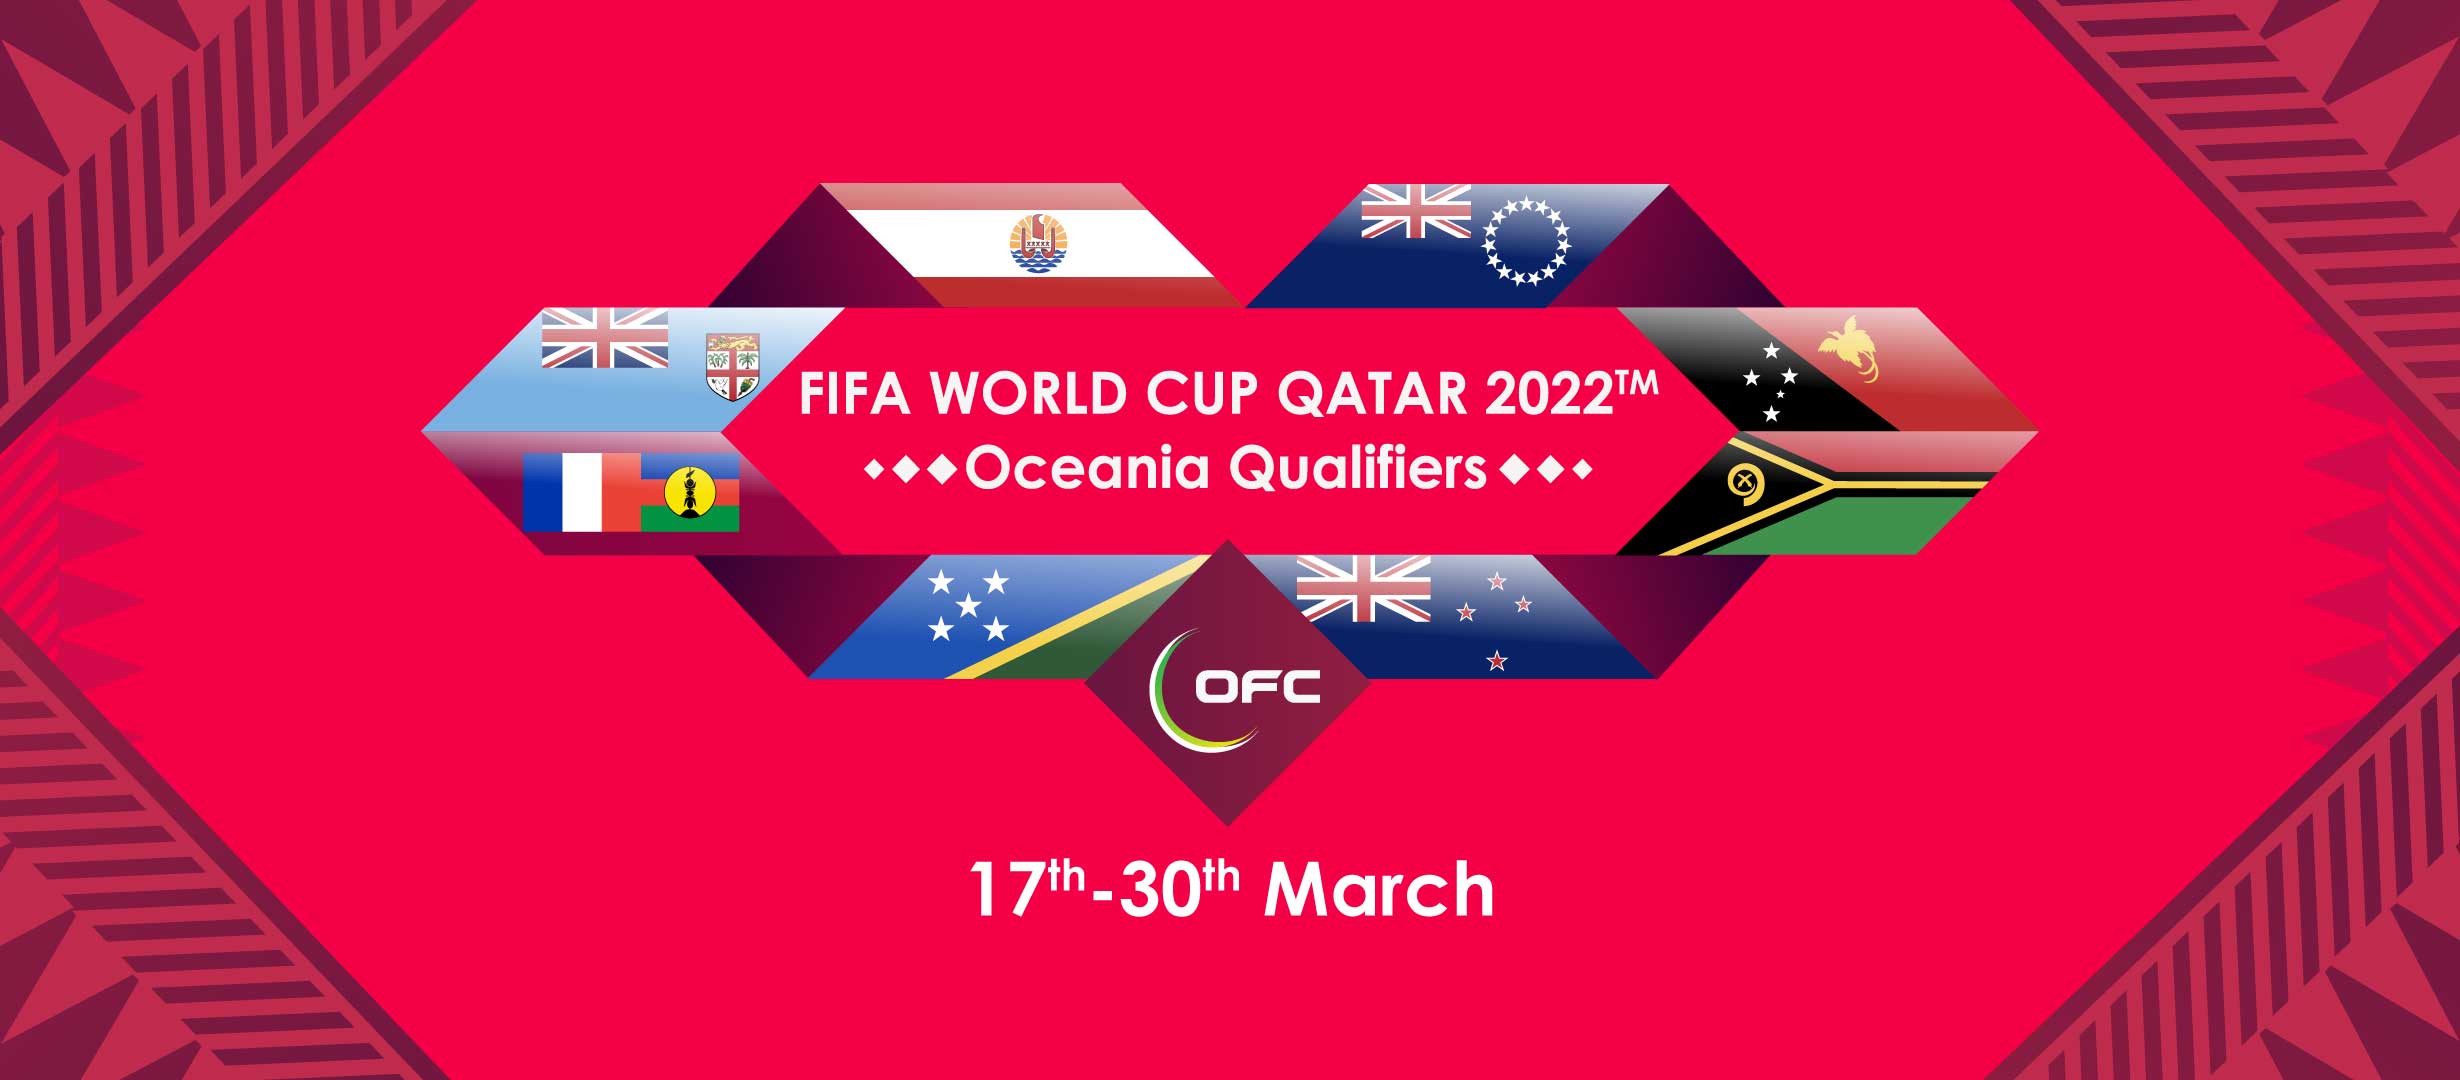 Qatar world cup 2022 qualifiers